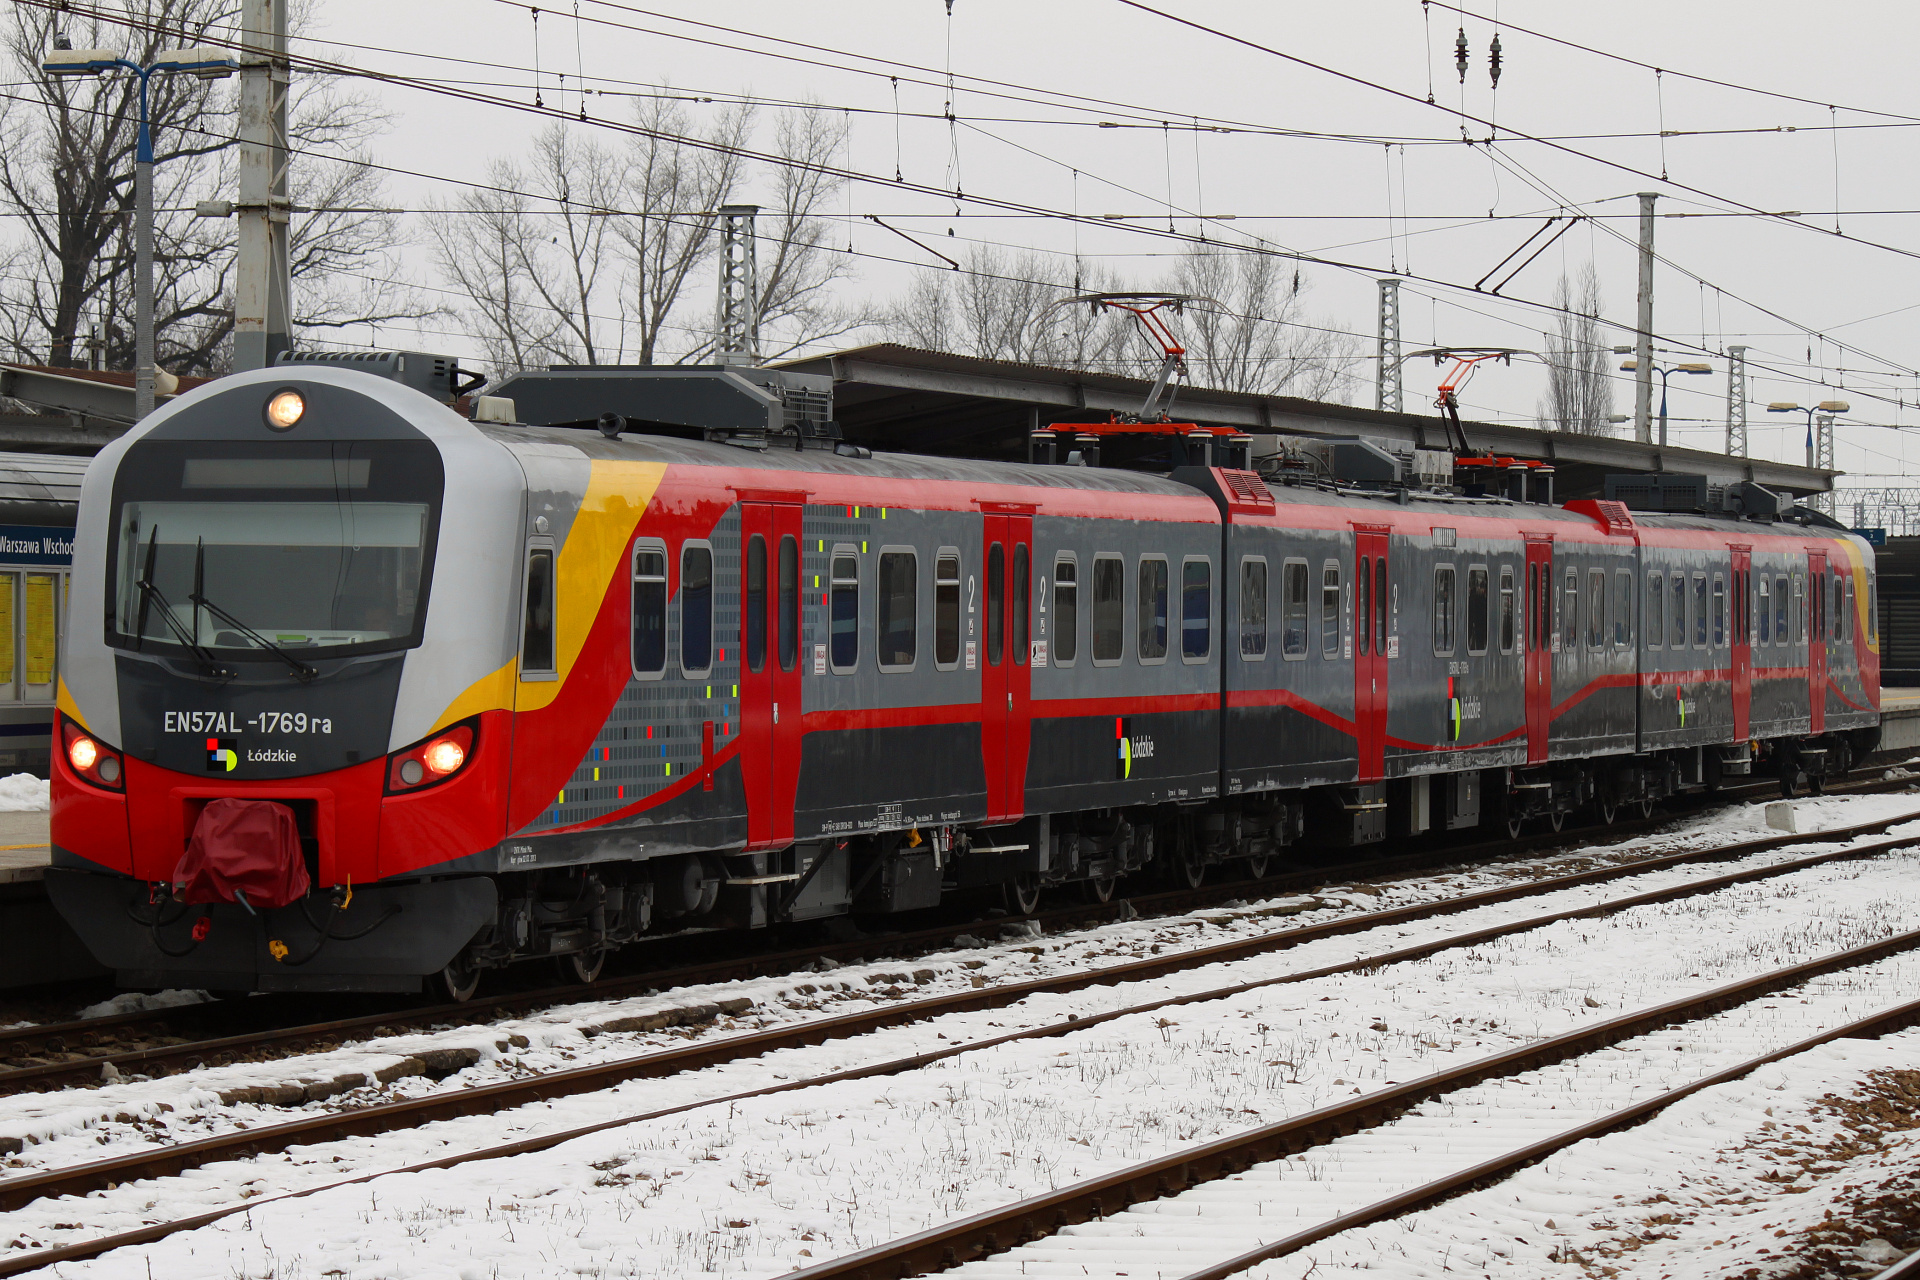 EN57AL-1769 (Vehicles » Trains and Locomotives » Pafawag 5B/6B EN57 and revisions)